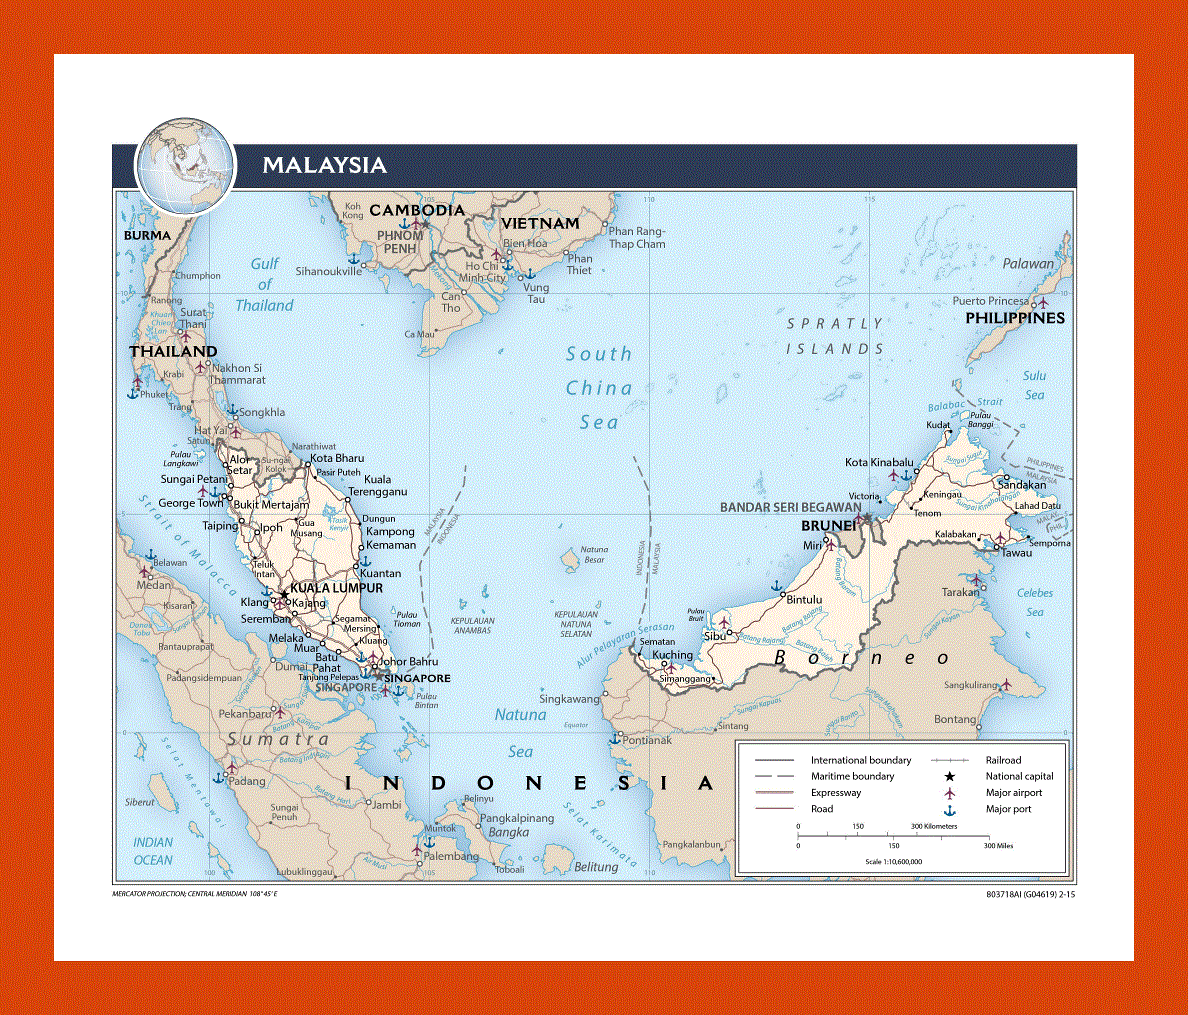 Political map of Malaysia - 2015